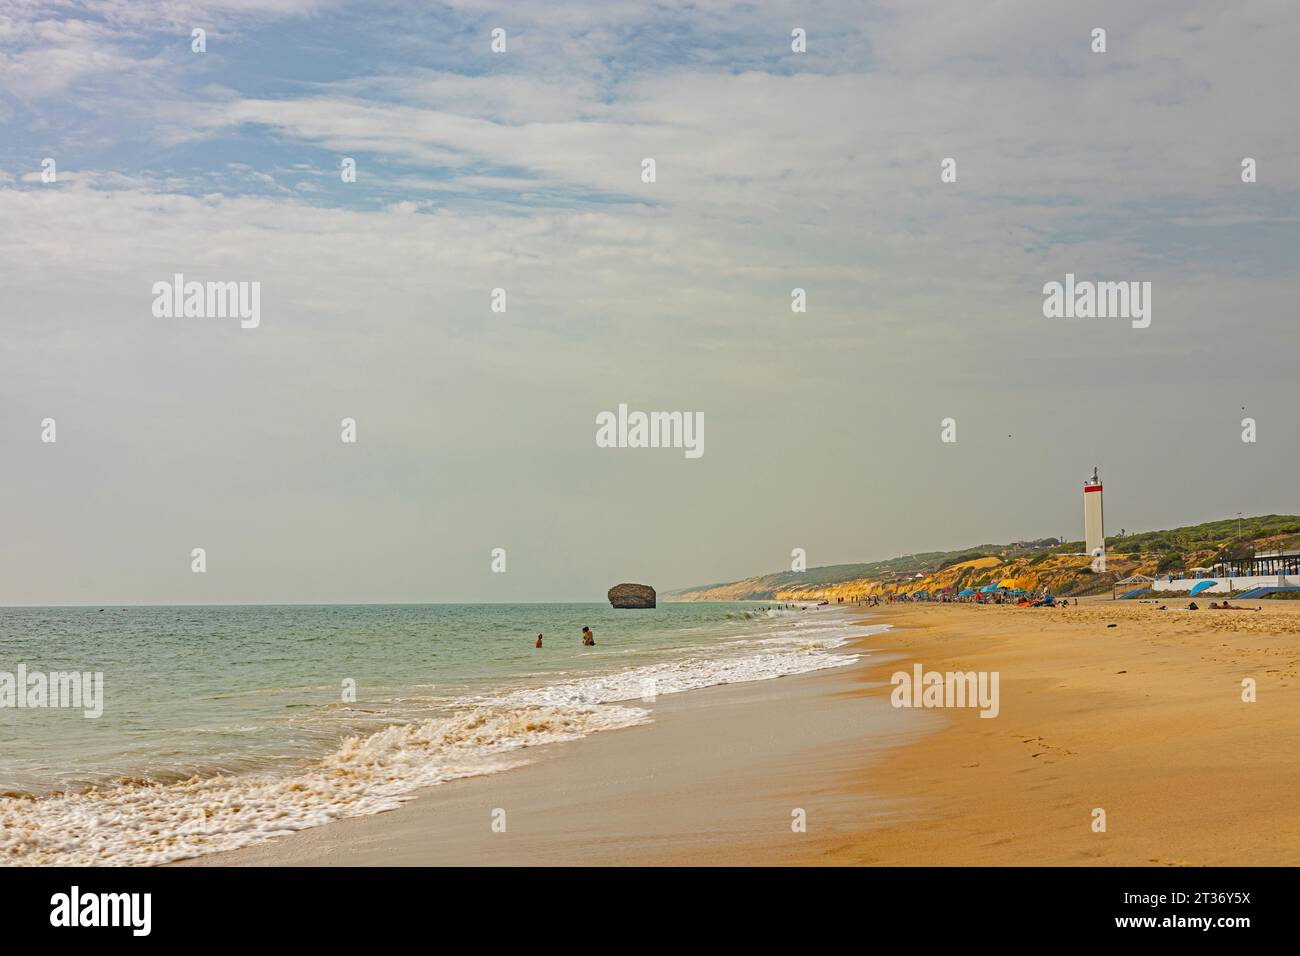 atlantic ocean and beach in Matalascanas Stock Photo